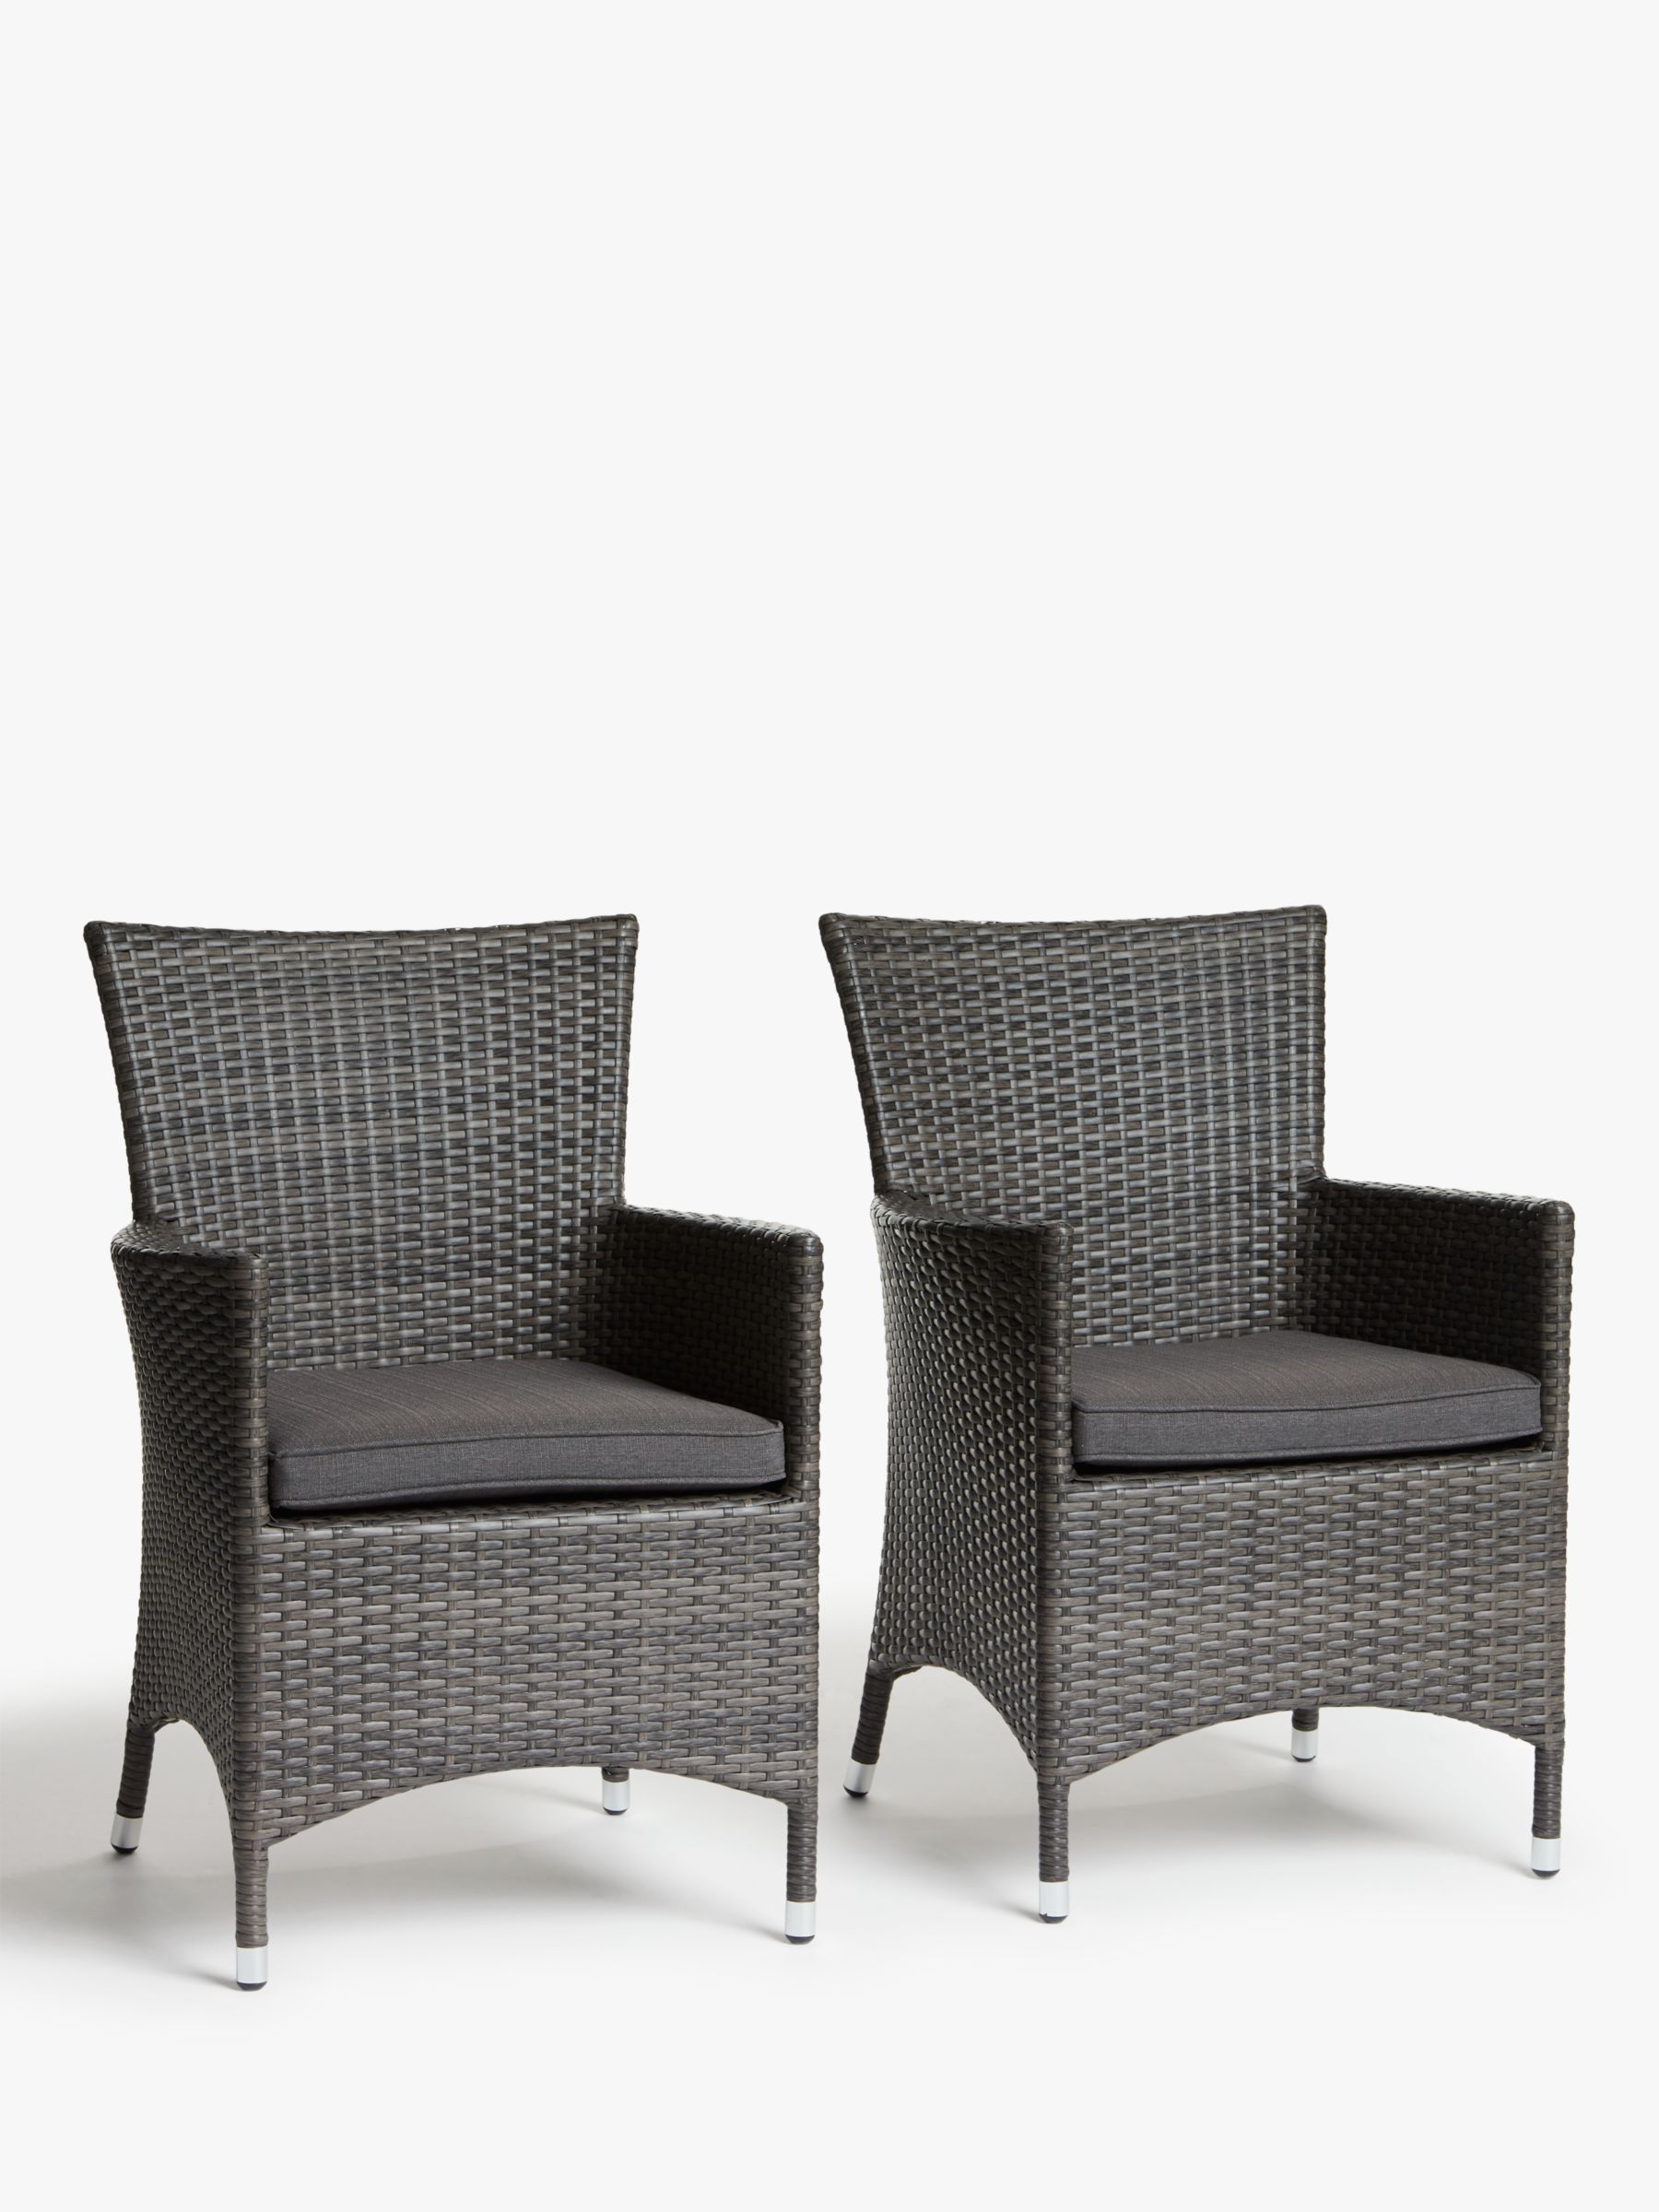 Photo of John lewis alora garden dining chairs set of 2 brown/grey